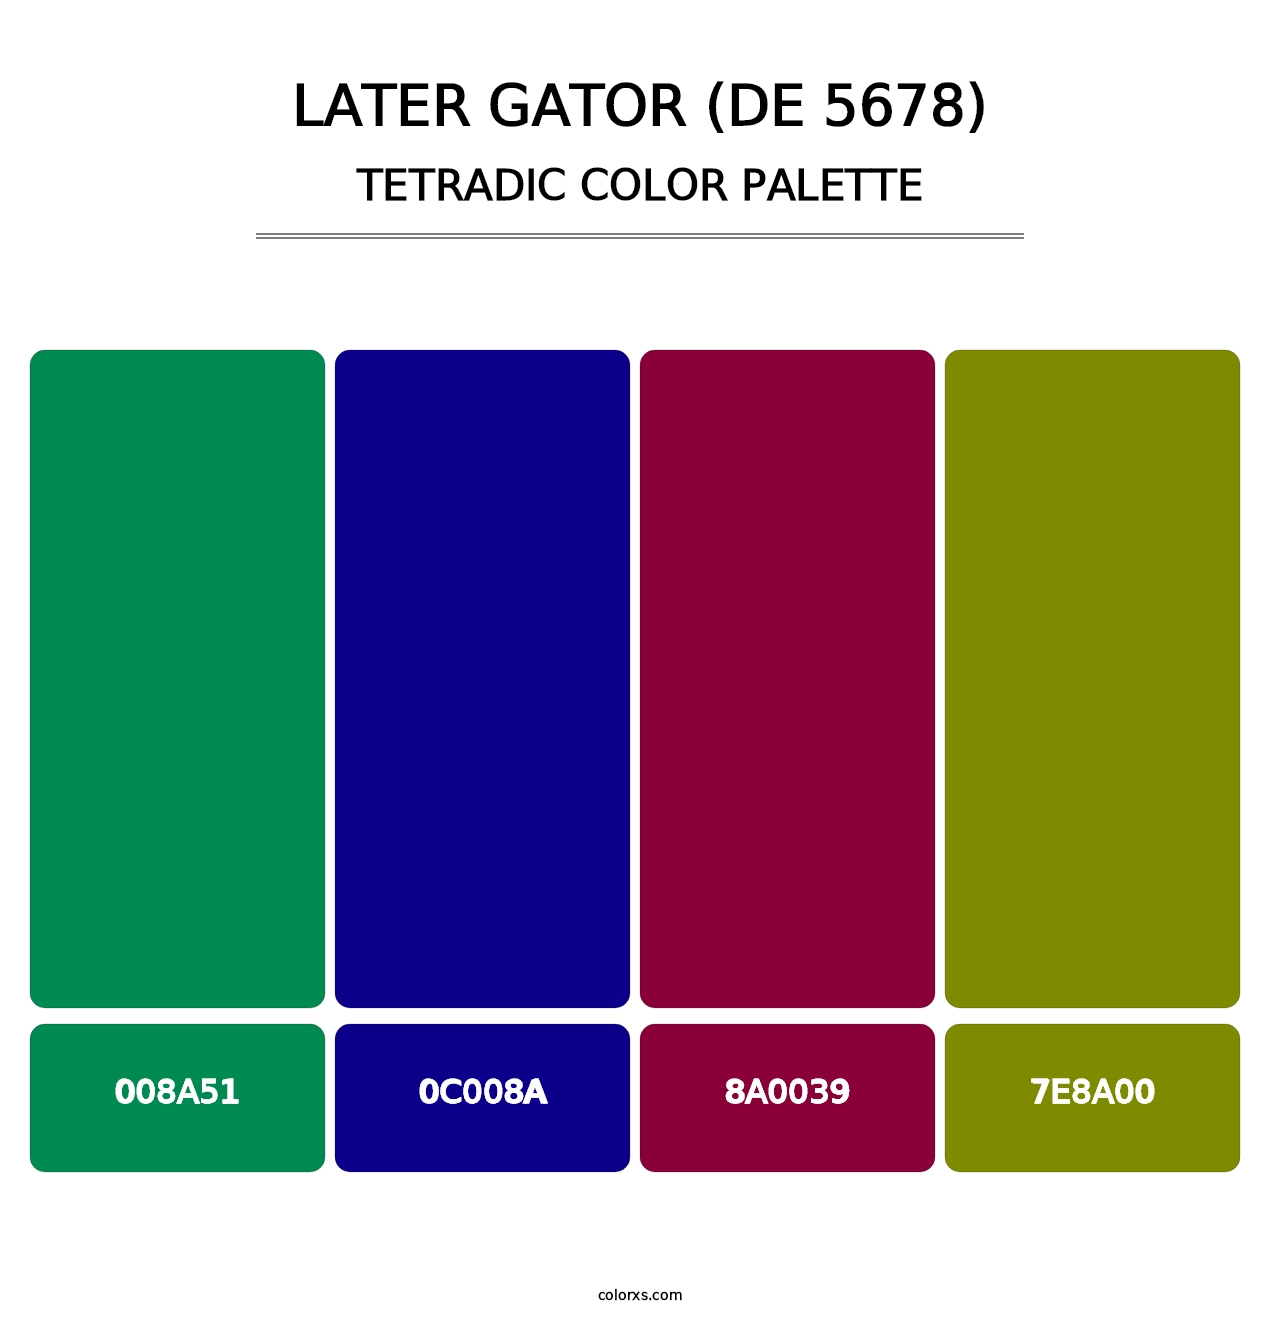 Later Gator (DE 5678) - Tetradic Color Palette